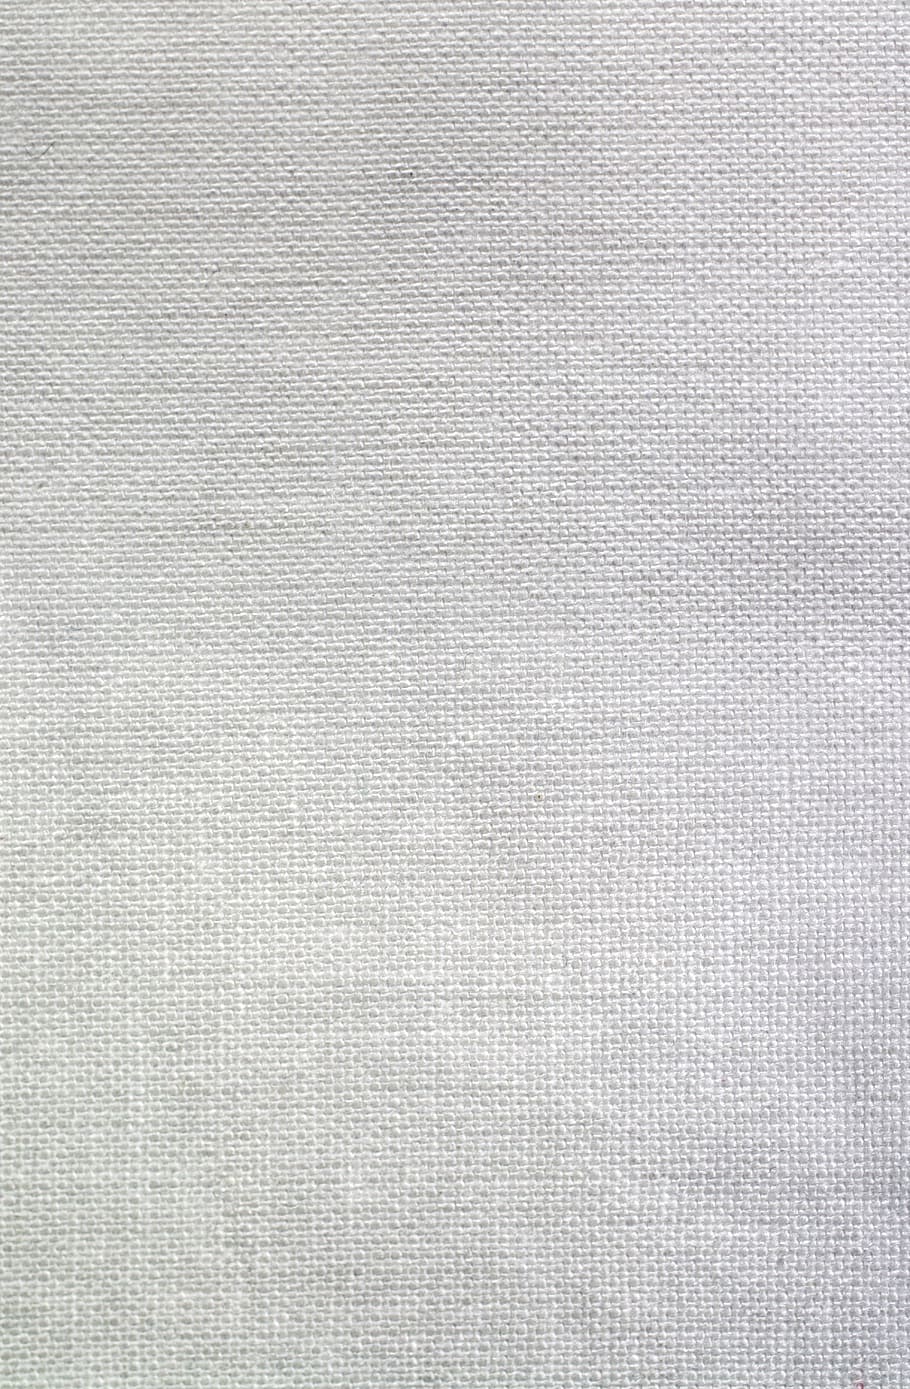 textil gris, lienzo, tela, textura, material, algodón, textil, superficie, blanco, estructura